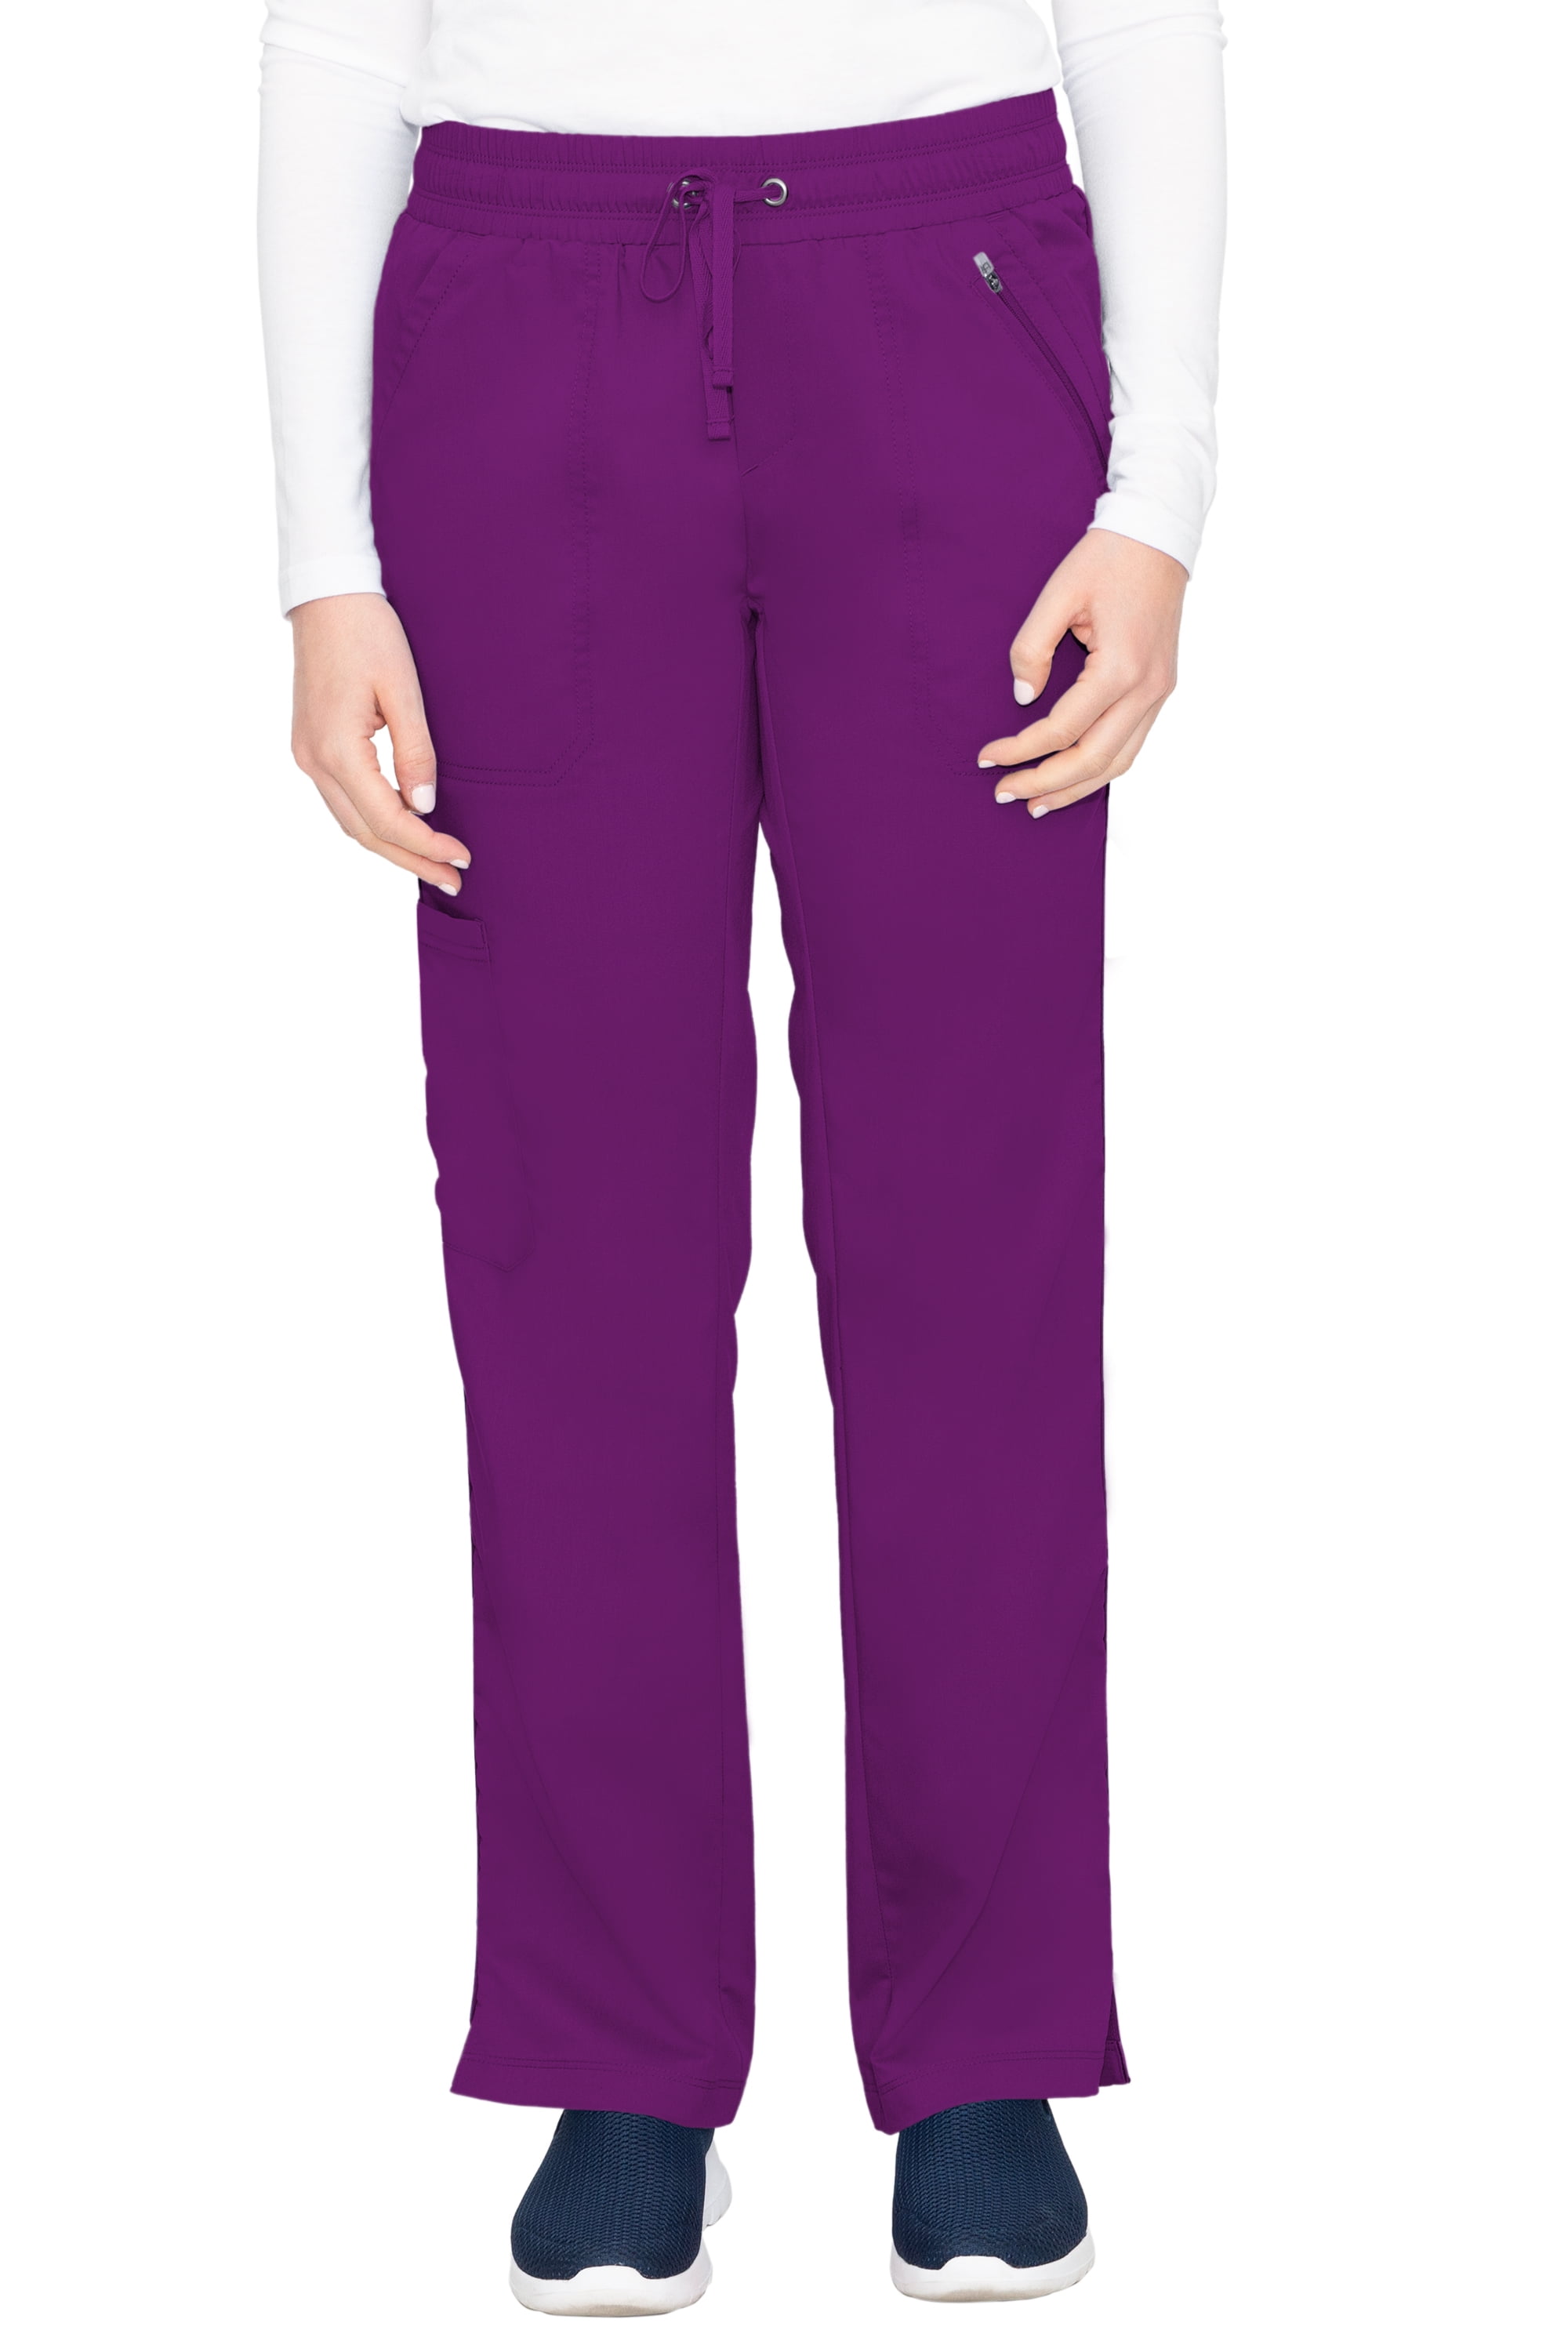 Healing Hands Purple Label Tall Tanya Pants - Walmart.com